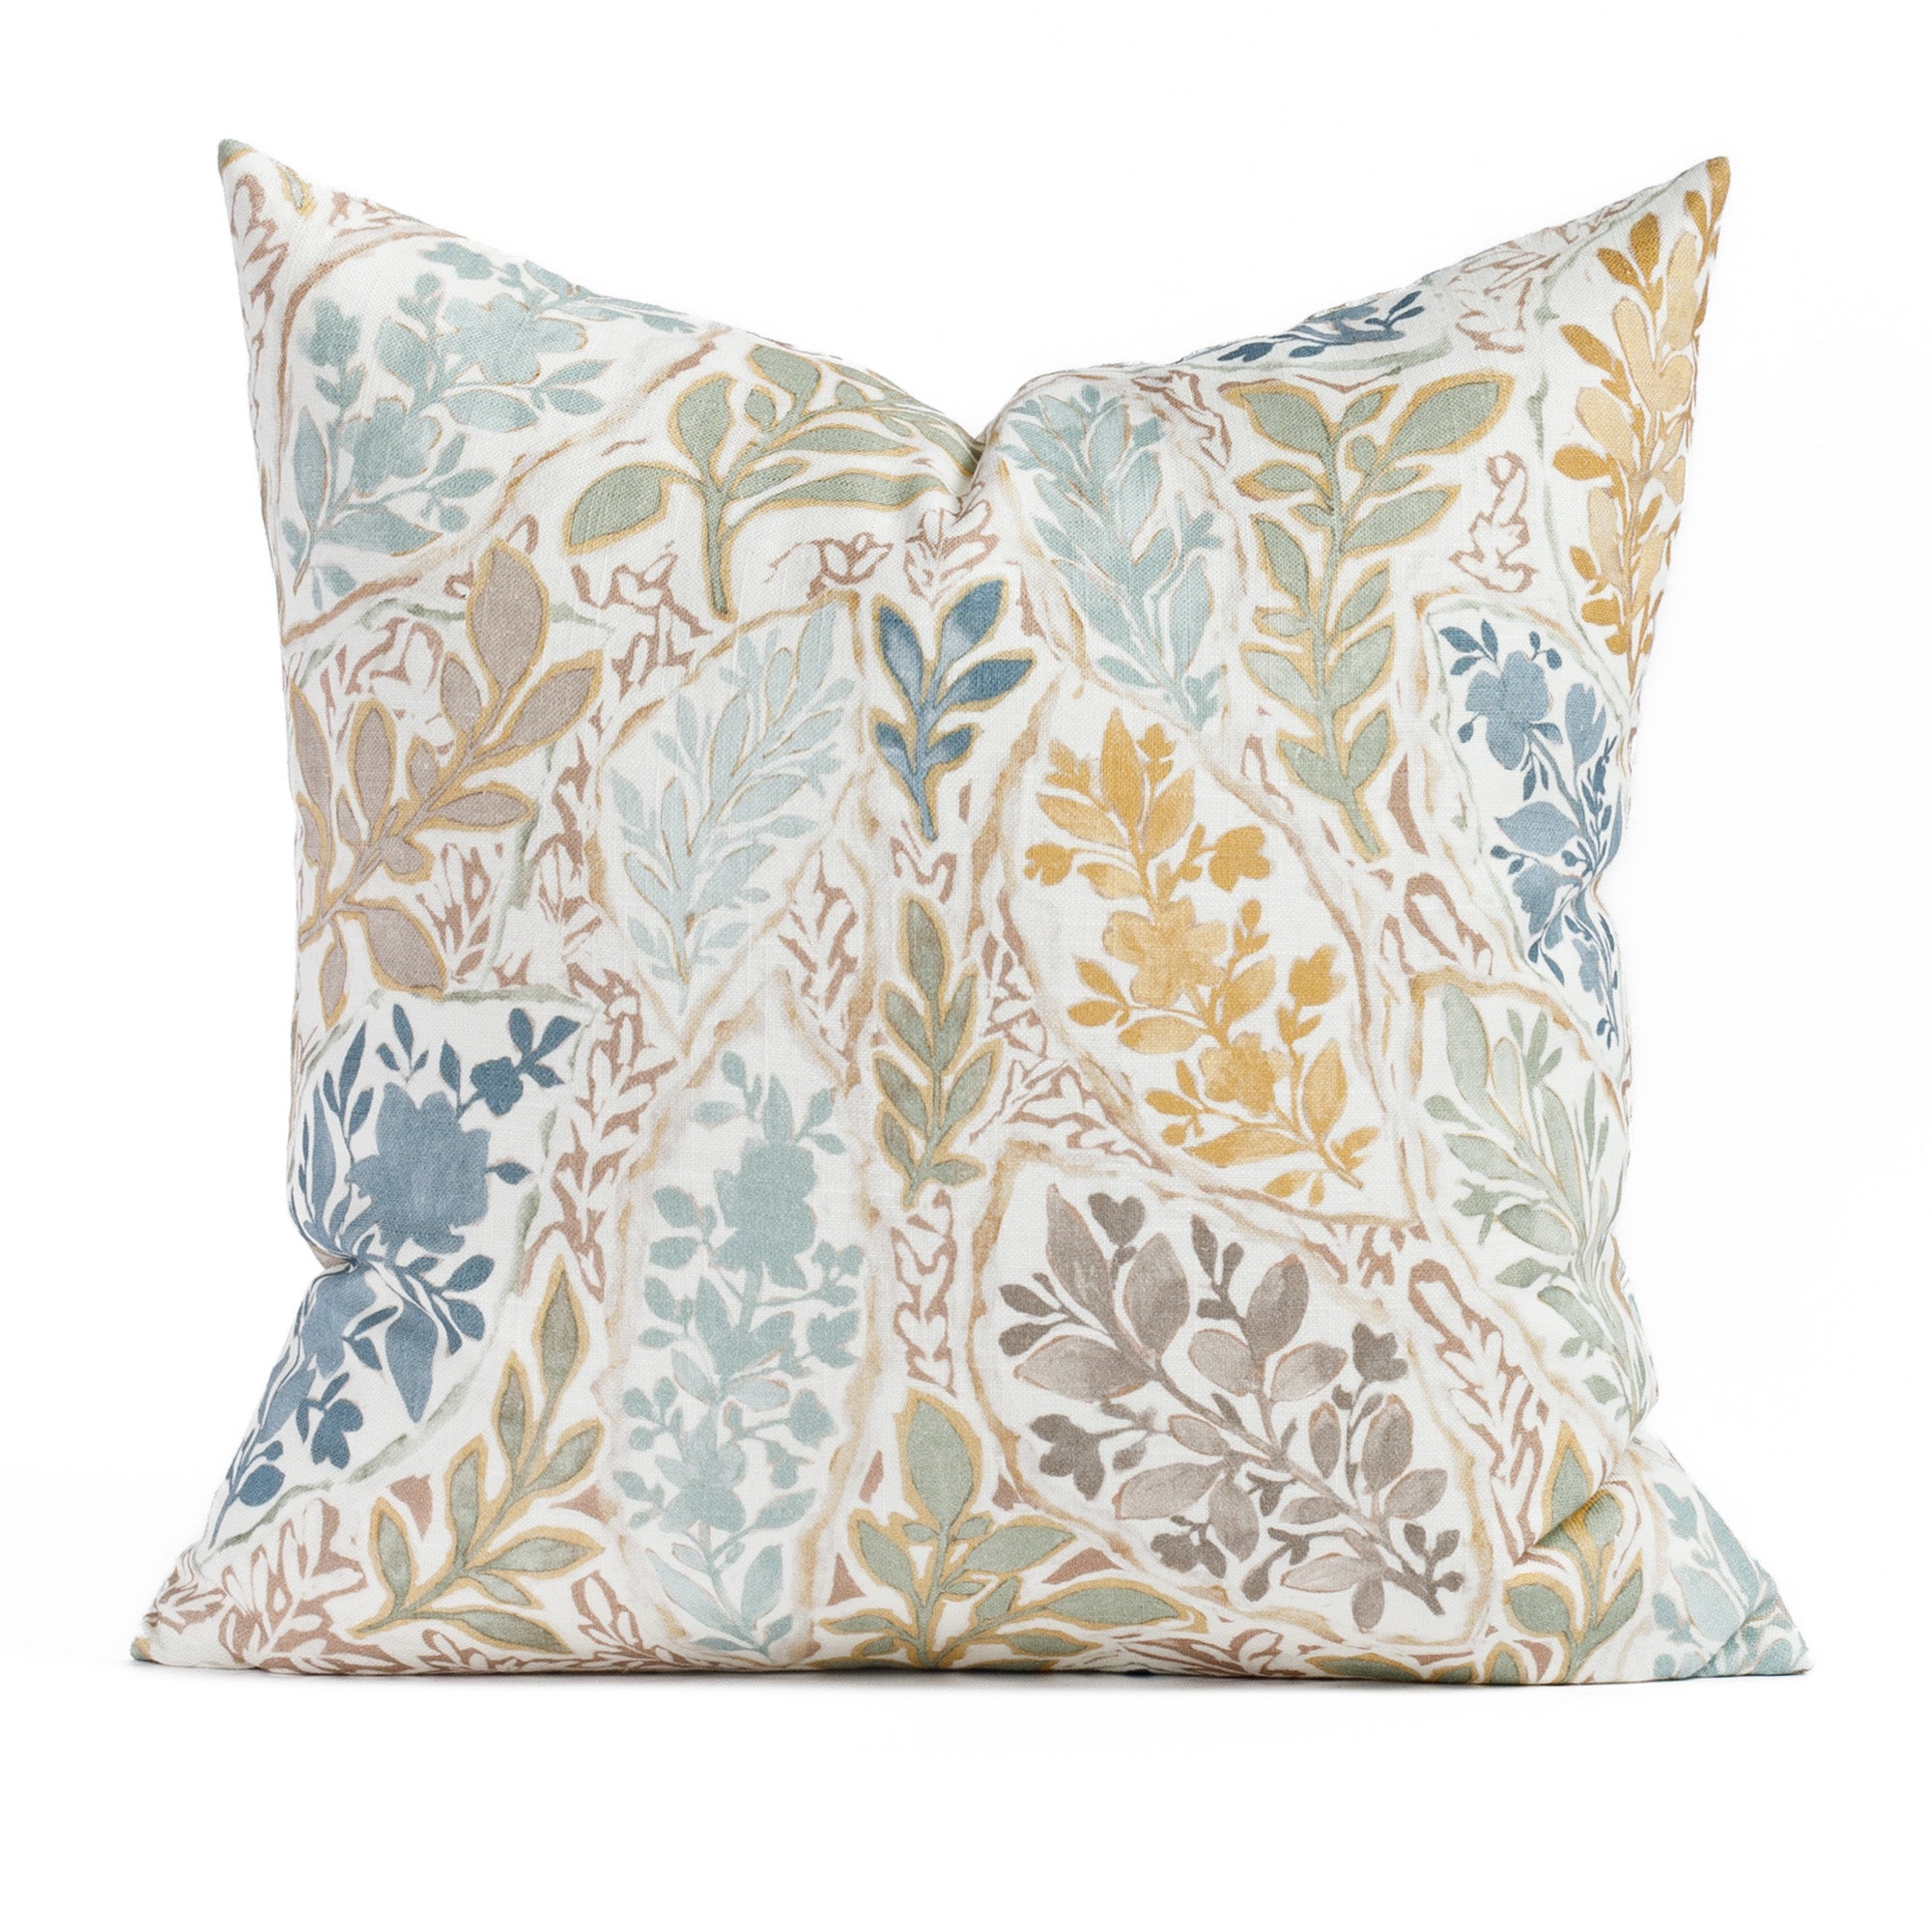 Rumi 20x20 Pillow Harvest, a multicoloured floral garden print Tonic Living pillow